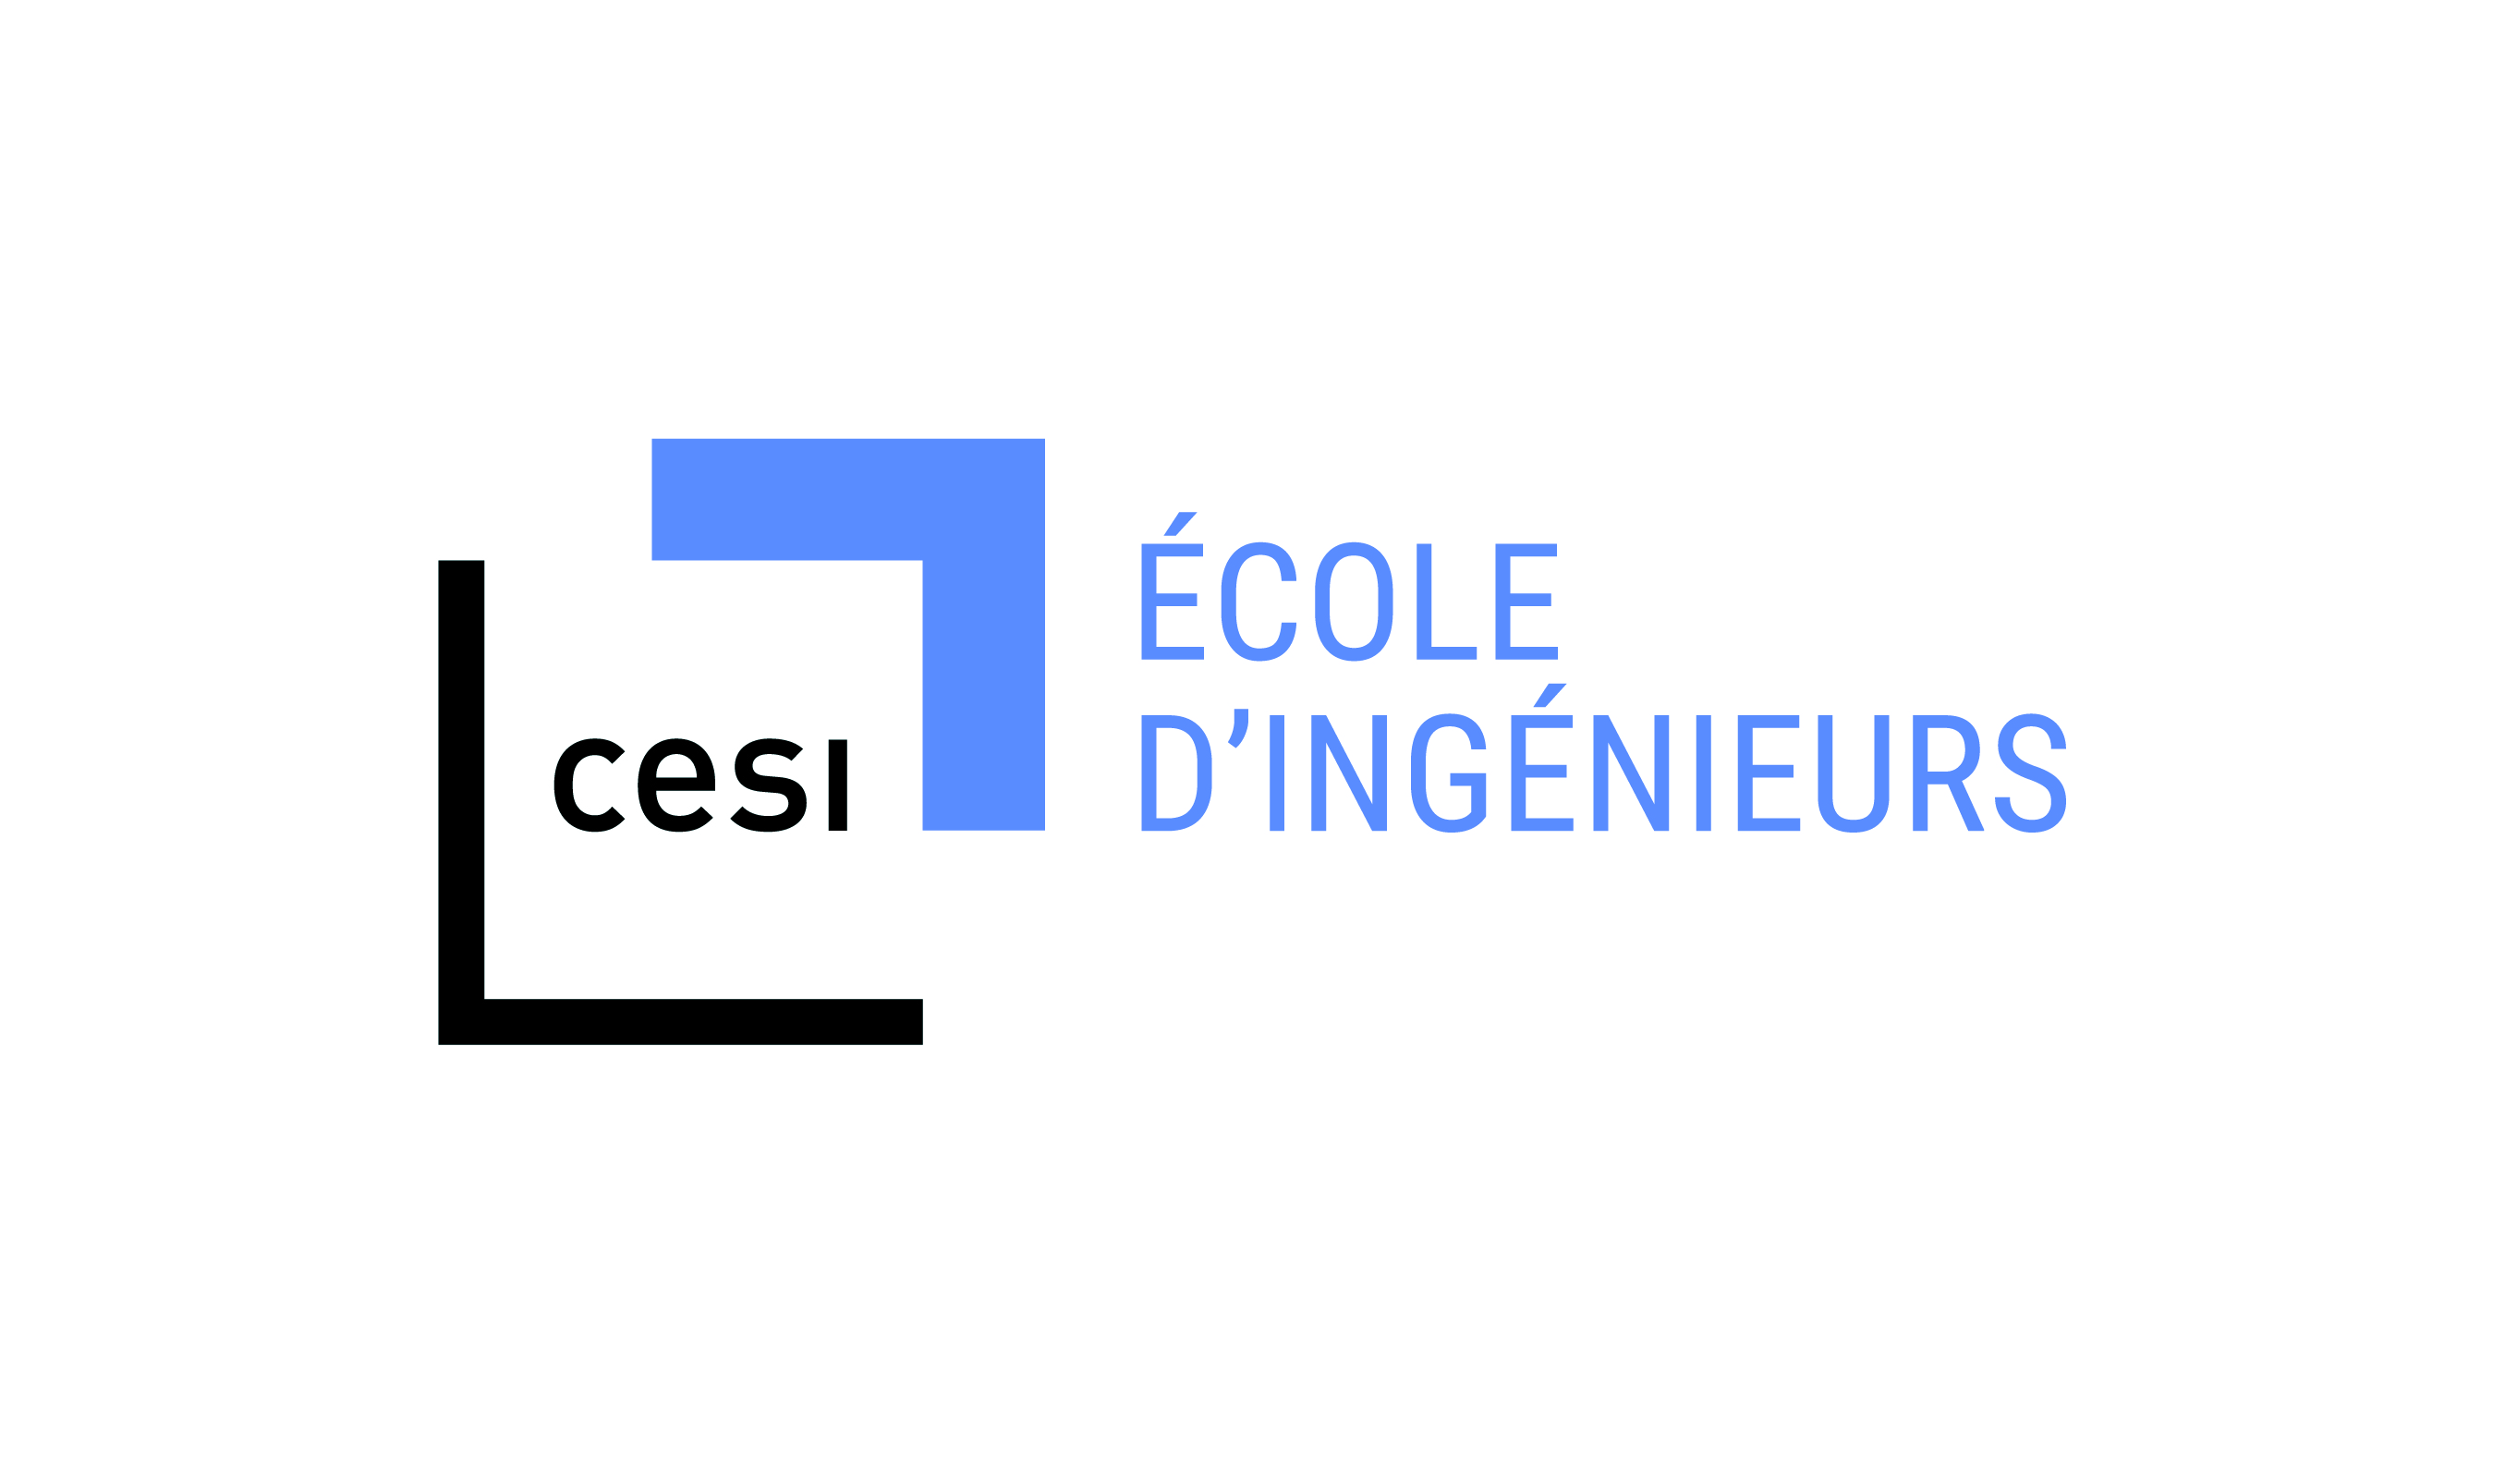 CESI Graduate School of Engineering